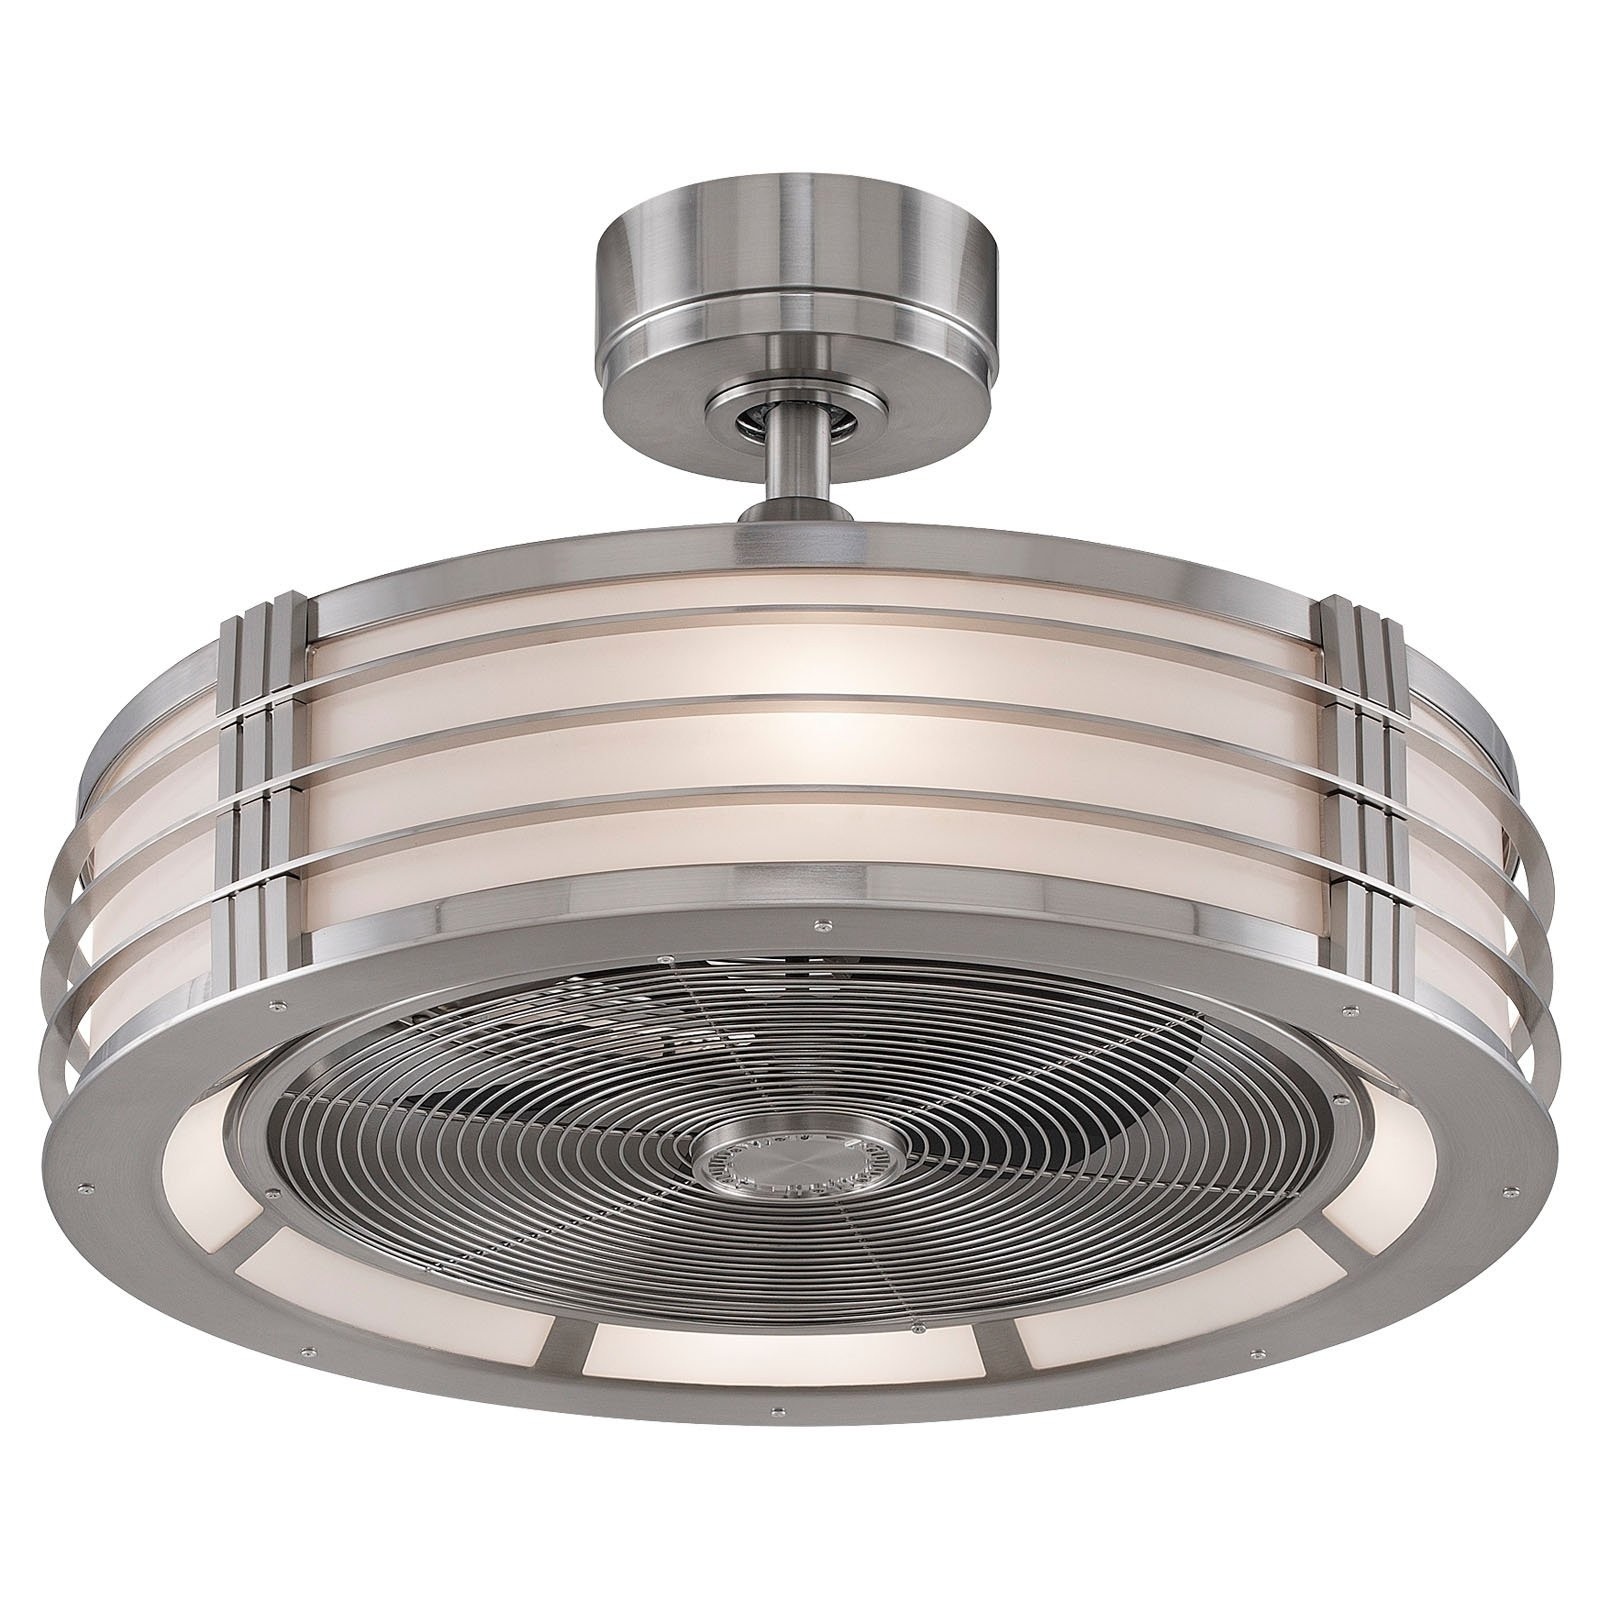 Bathroom Ceiling Light With Fan
 10 adventiges of Small bathroom ceiling fans